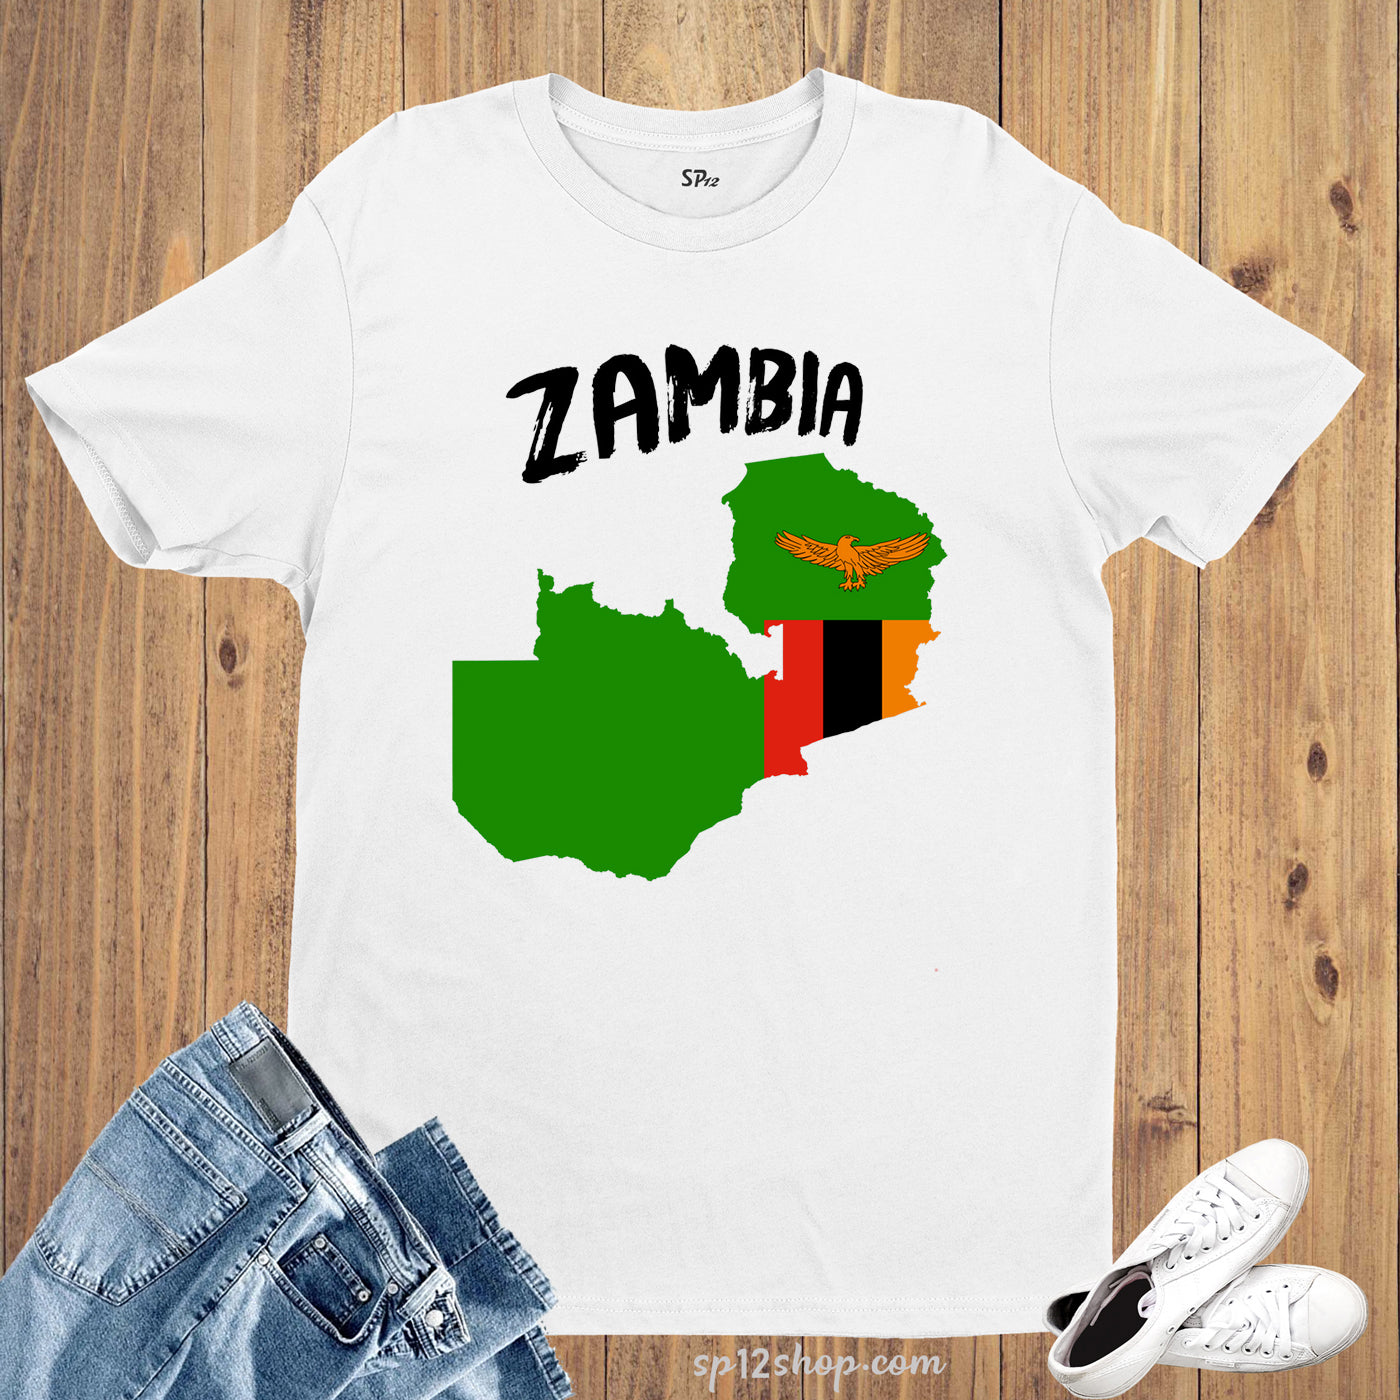 Zambia Flag T Shirt Olympics FIFA World Cup Country Flag Tee Shirt